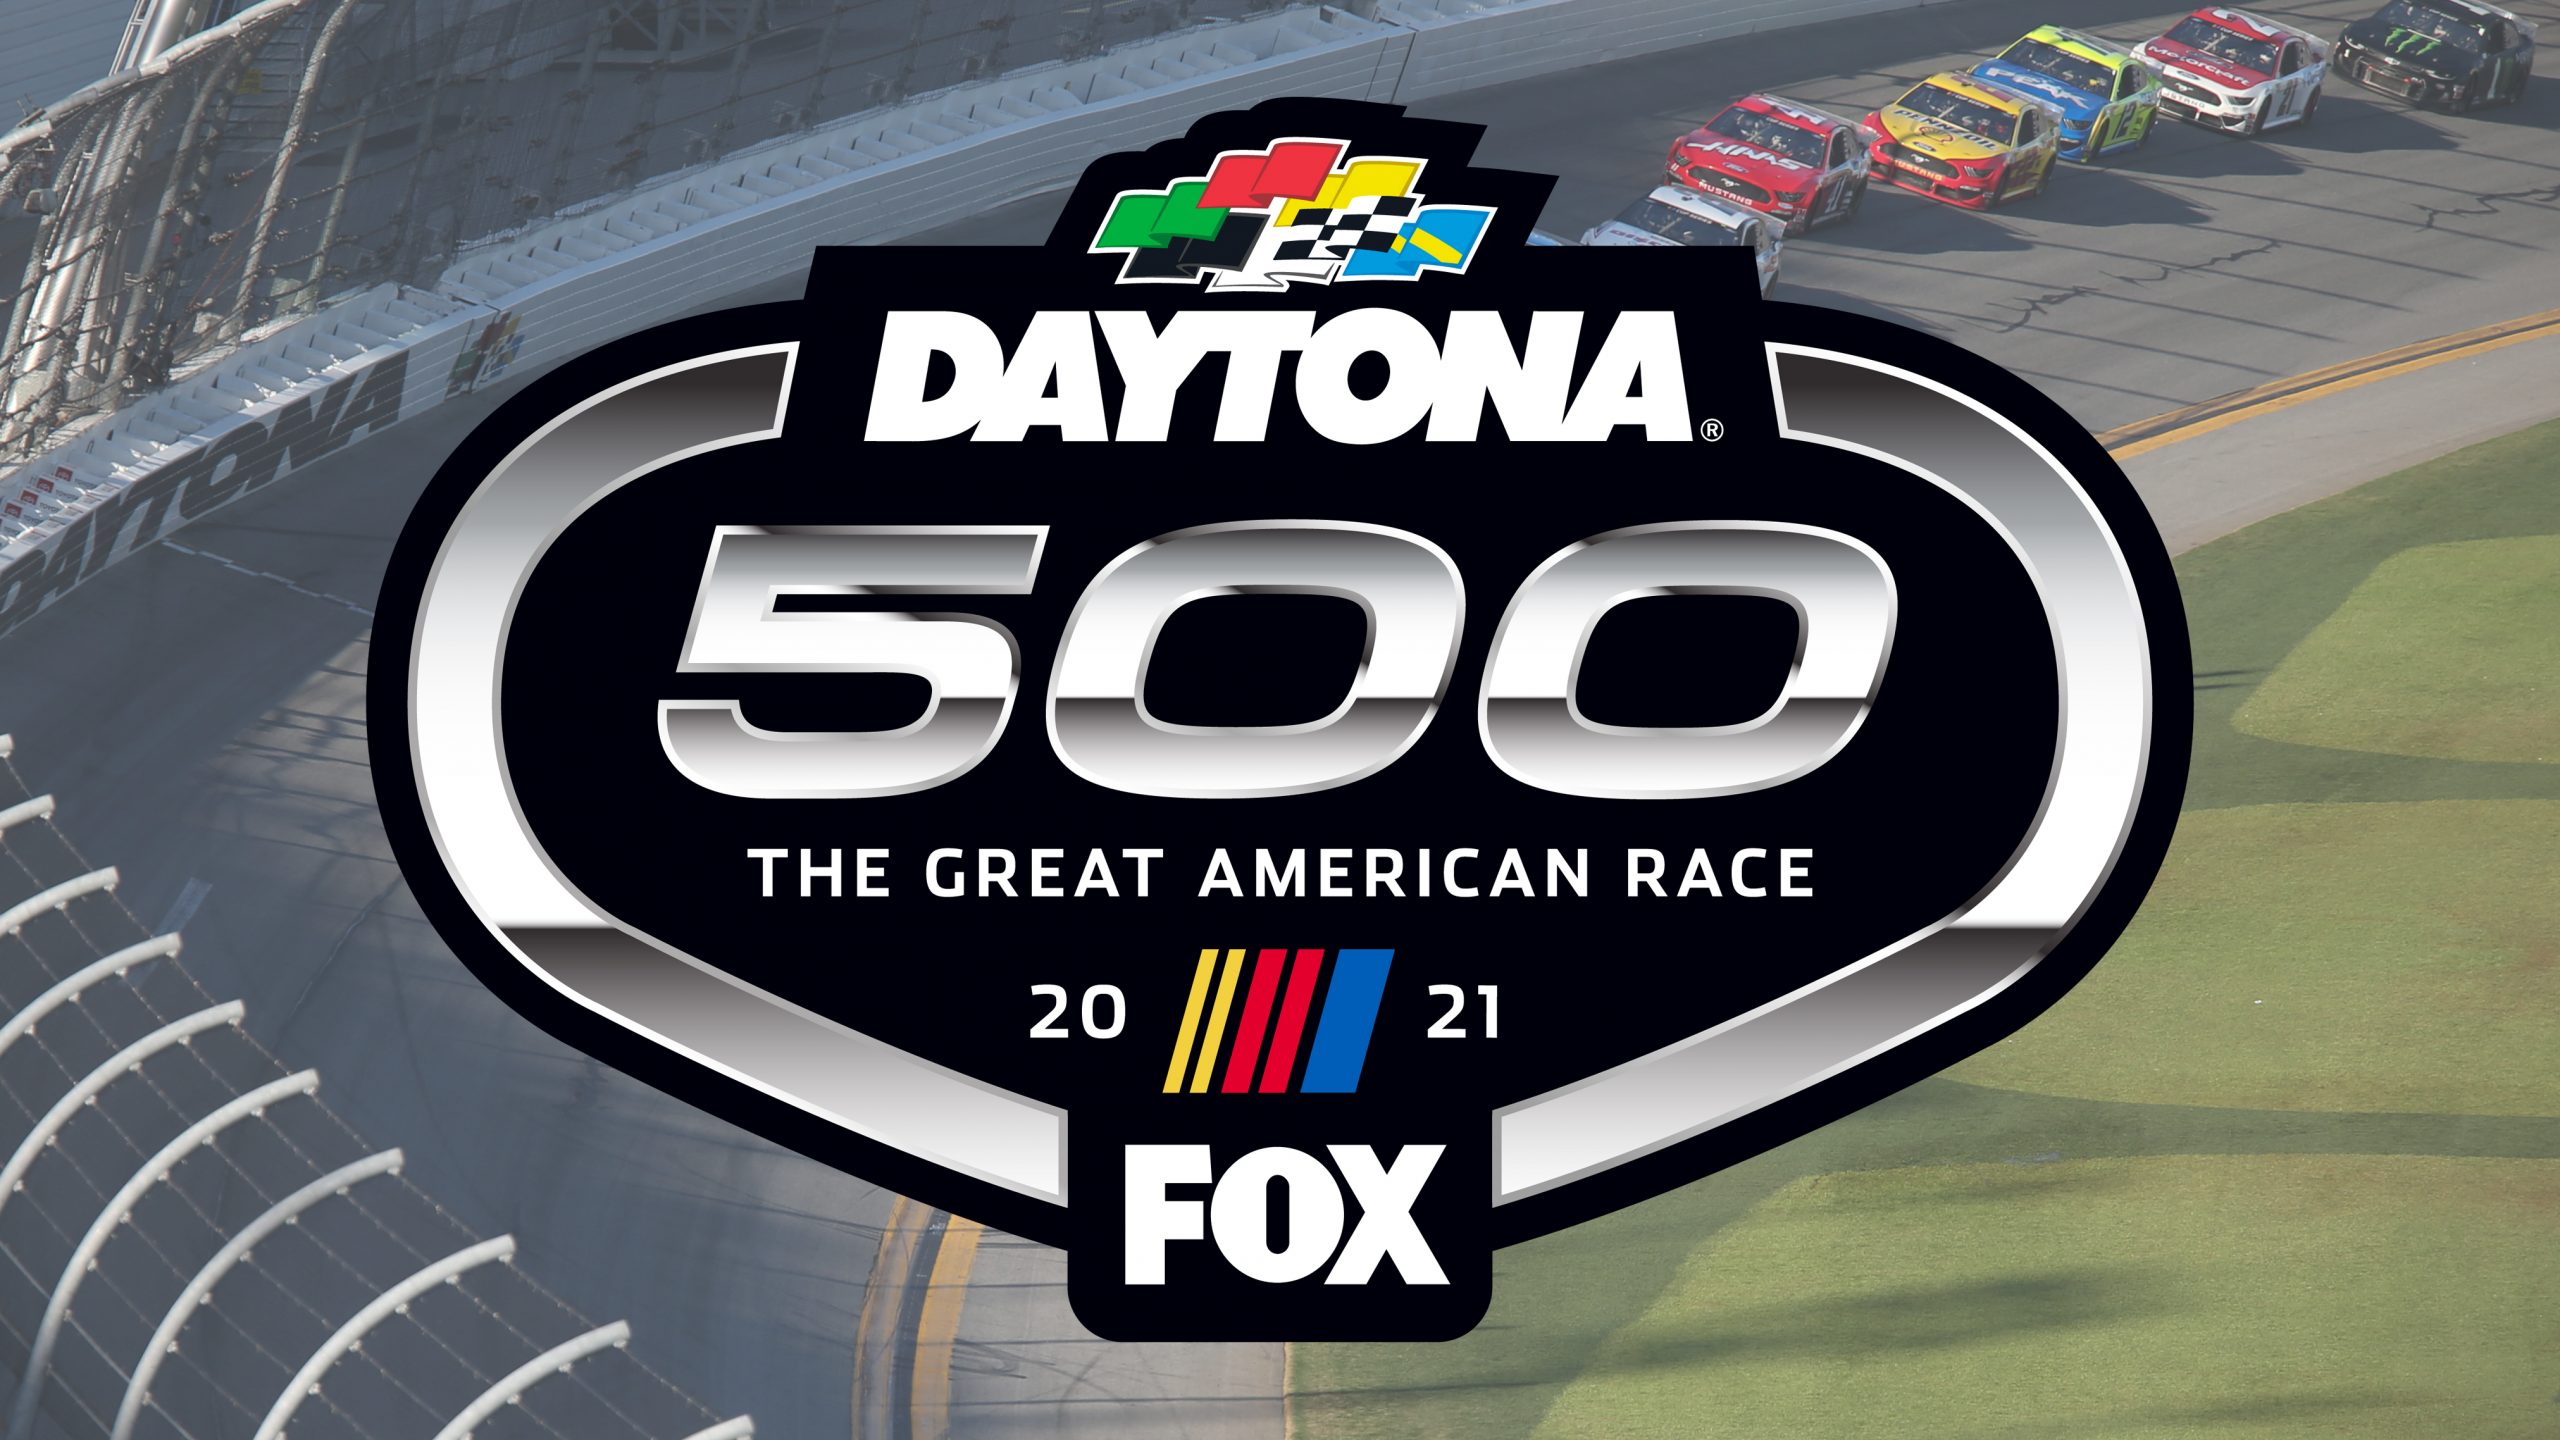 Daytona 500 Iconic Race Is Sonic Centerpiece of Fox Sports Speedweeks